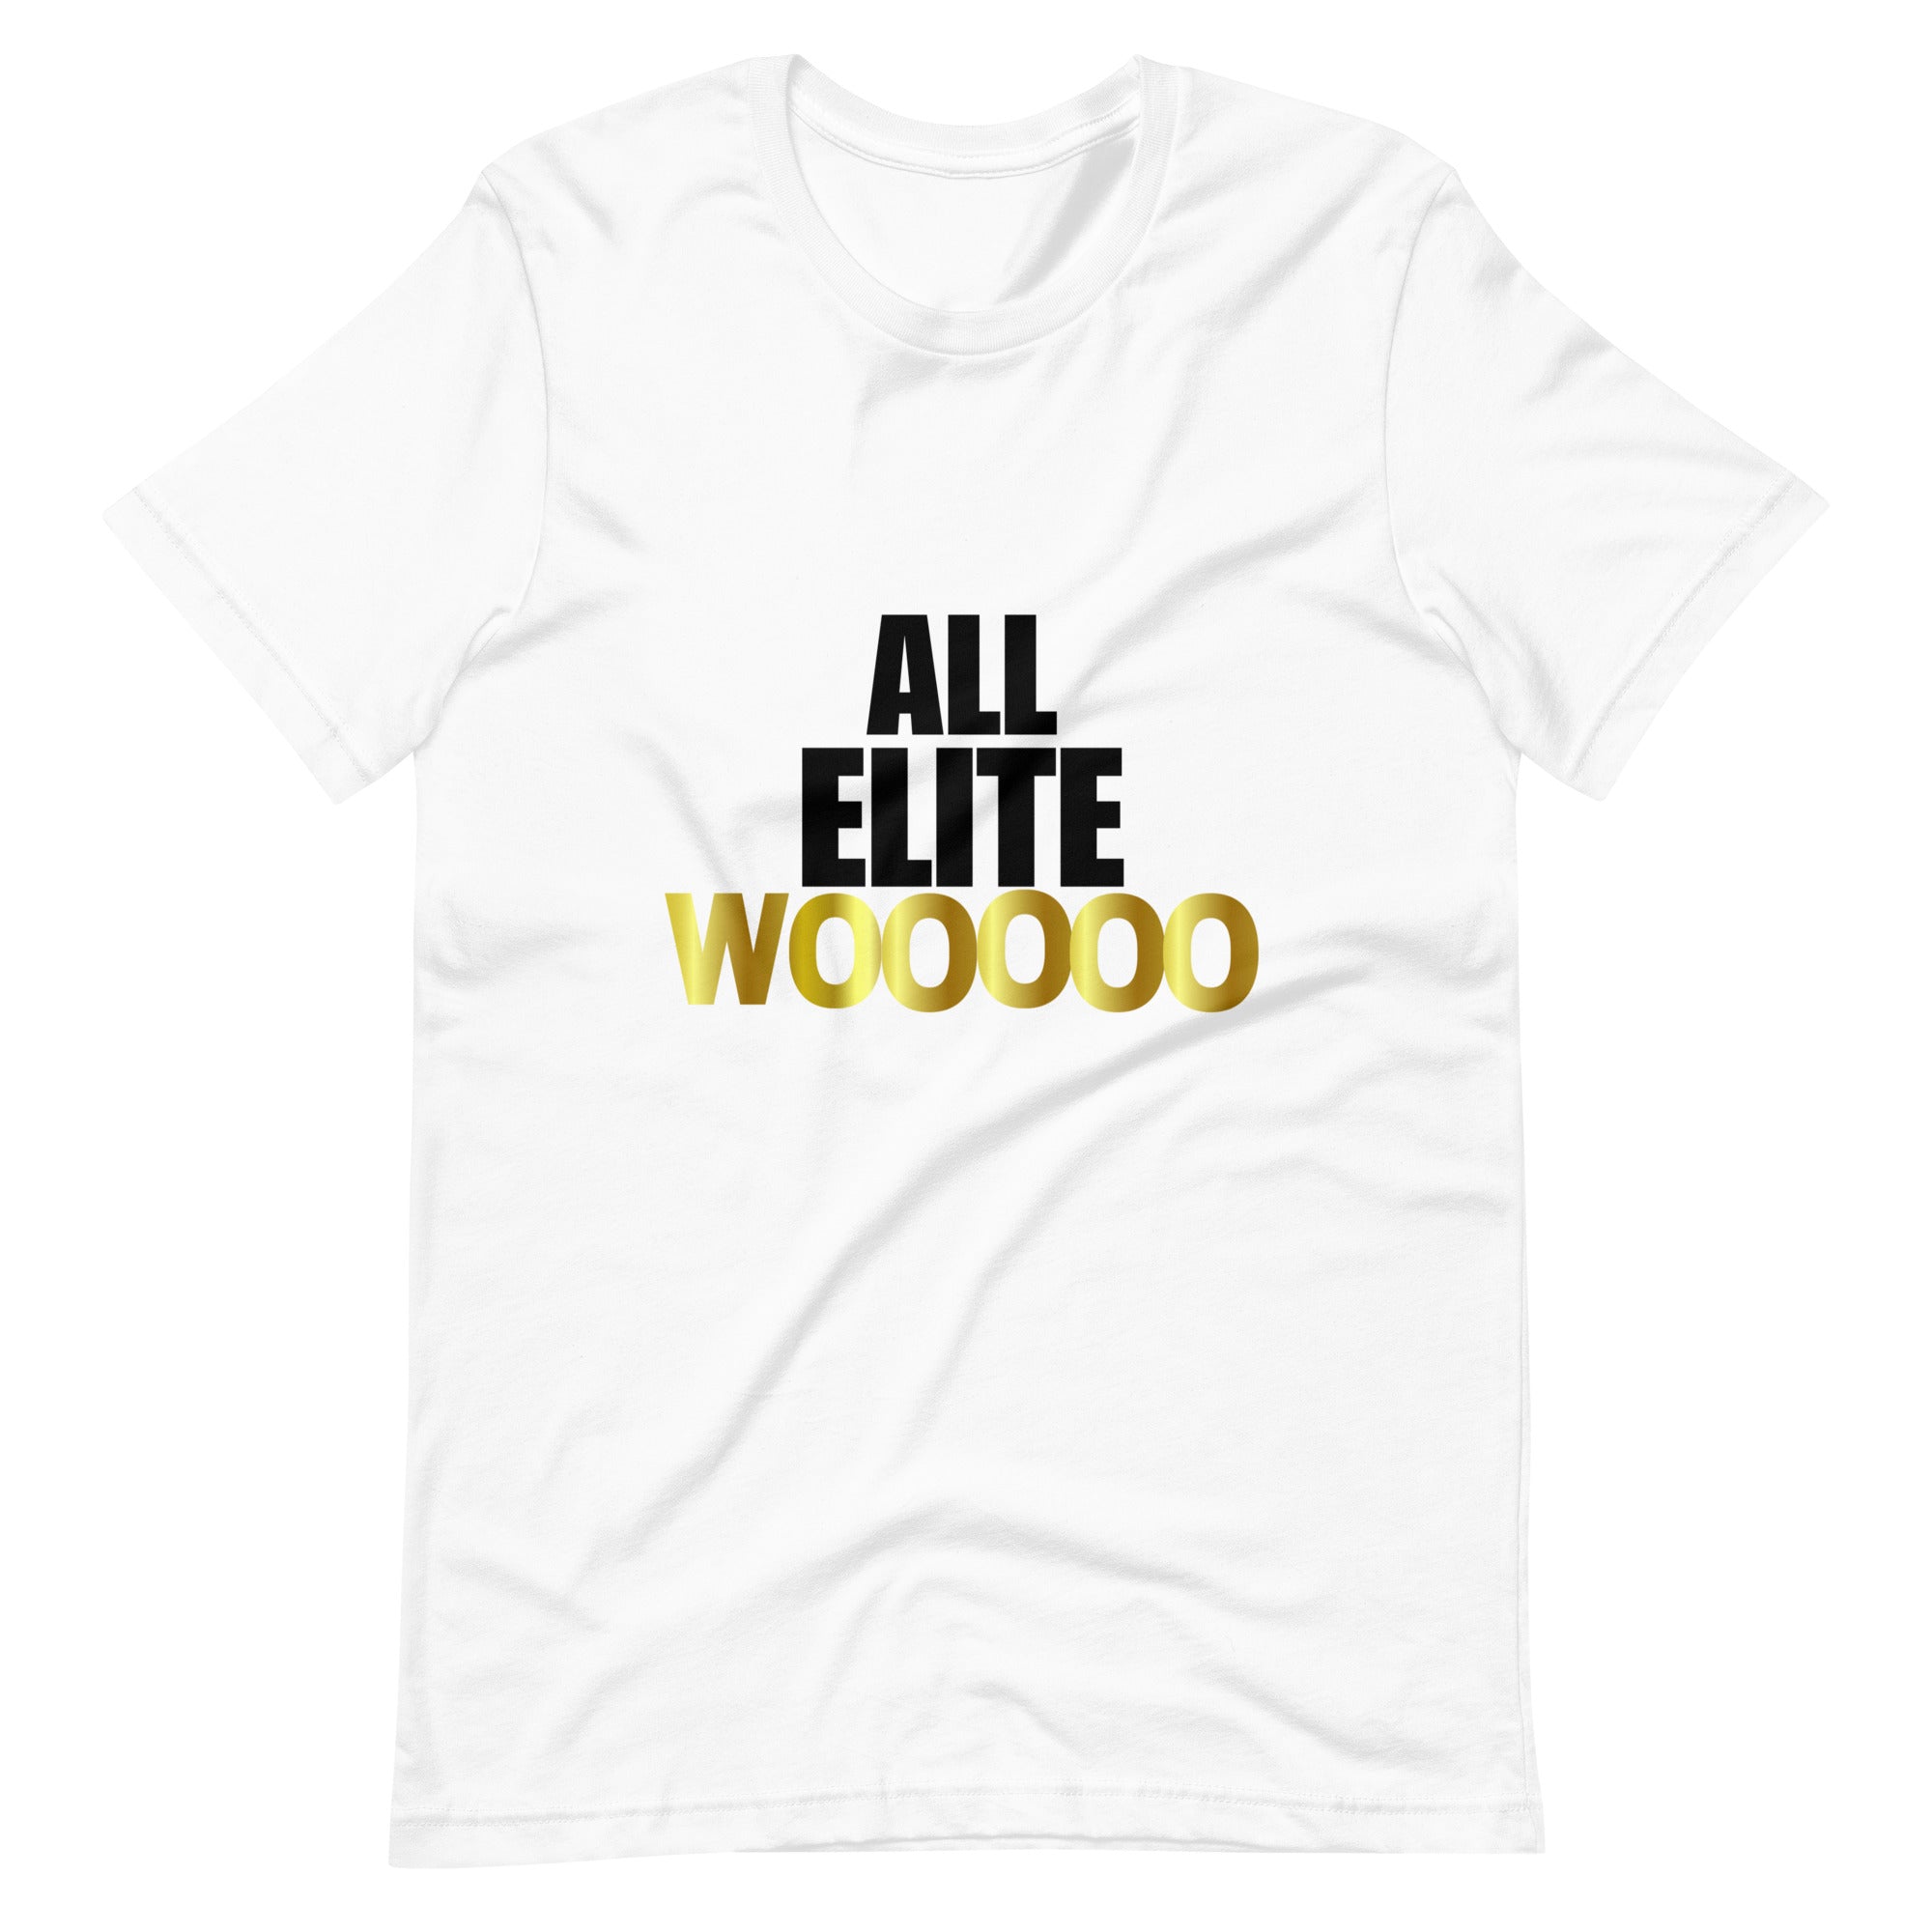 All Elite Wooooo! t-shirt